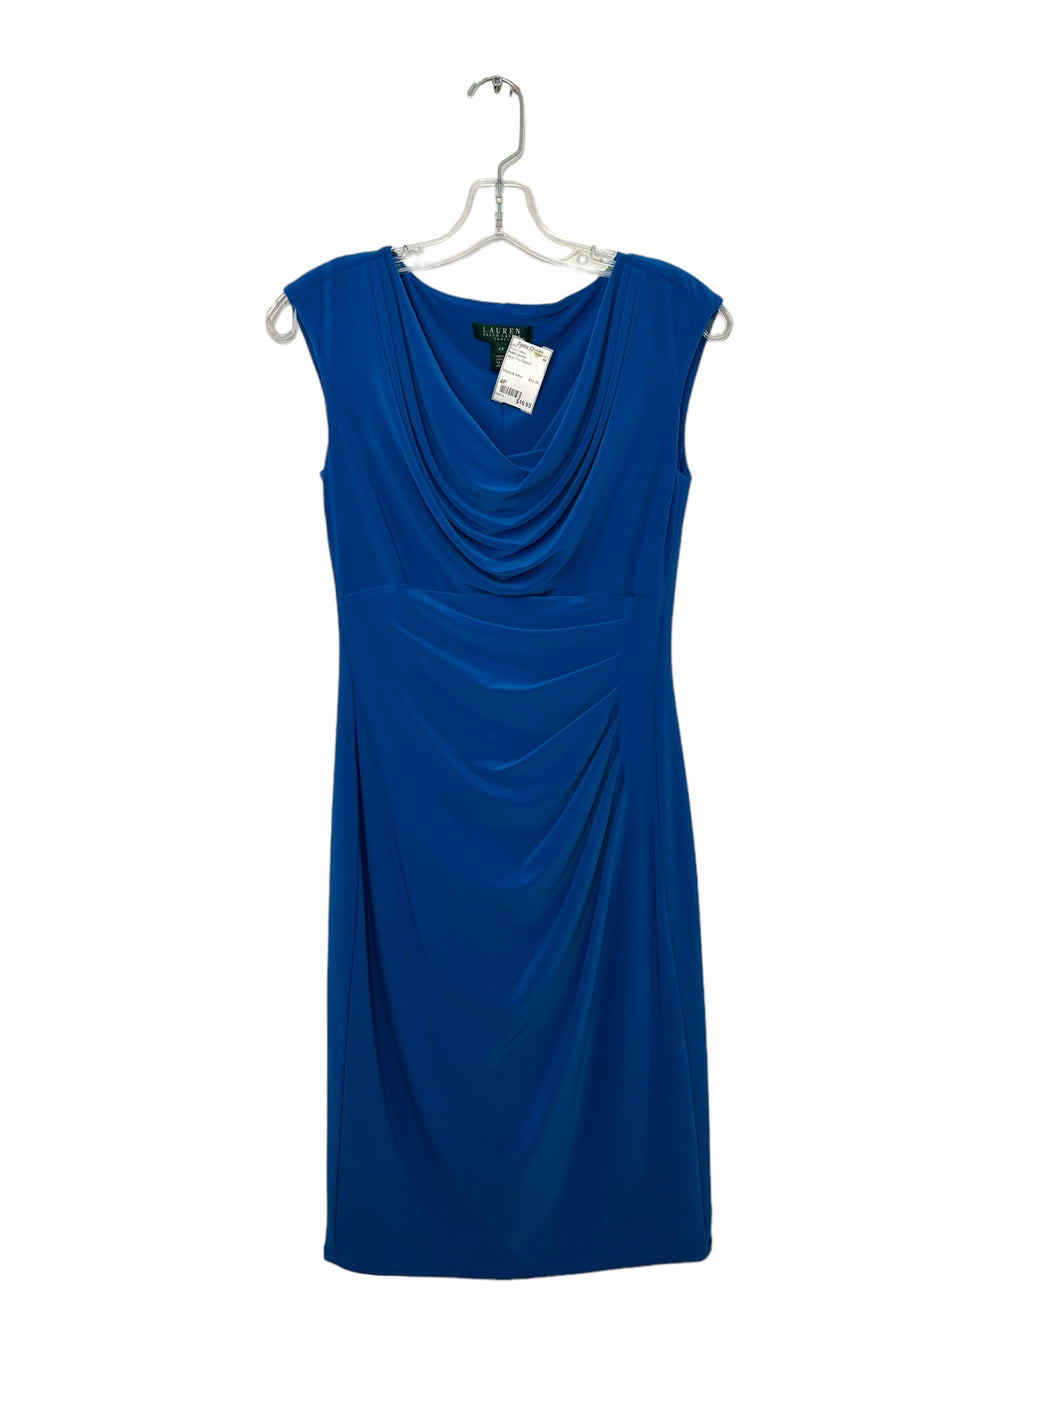 Ralph Lauren Size 4P Aqua Dress- Ladies